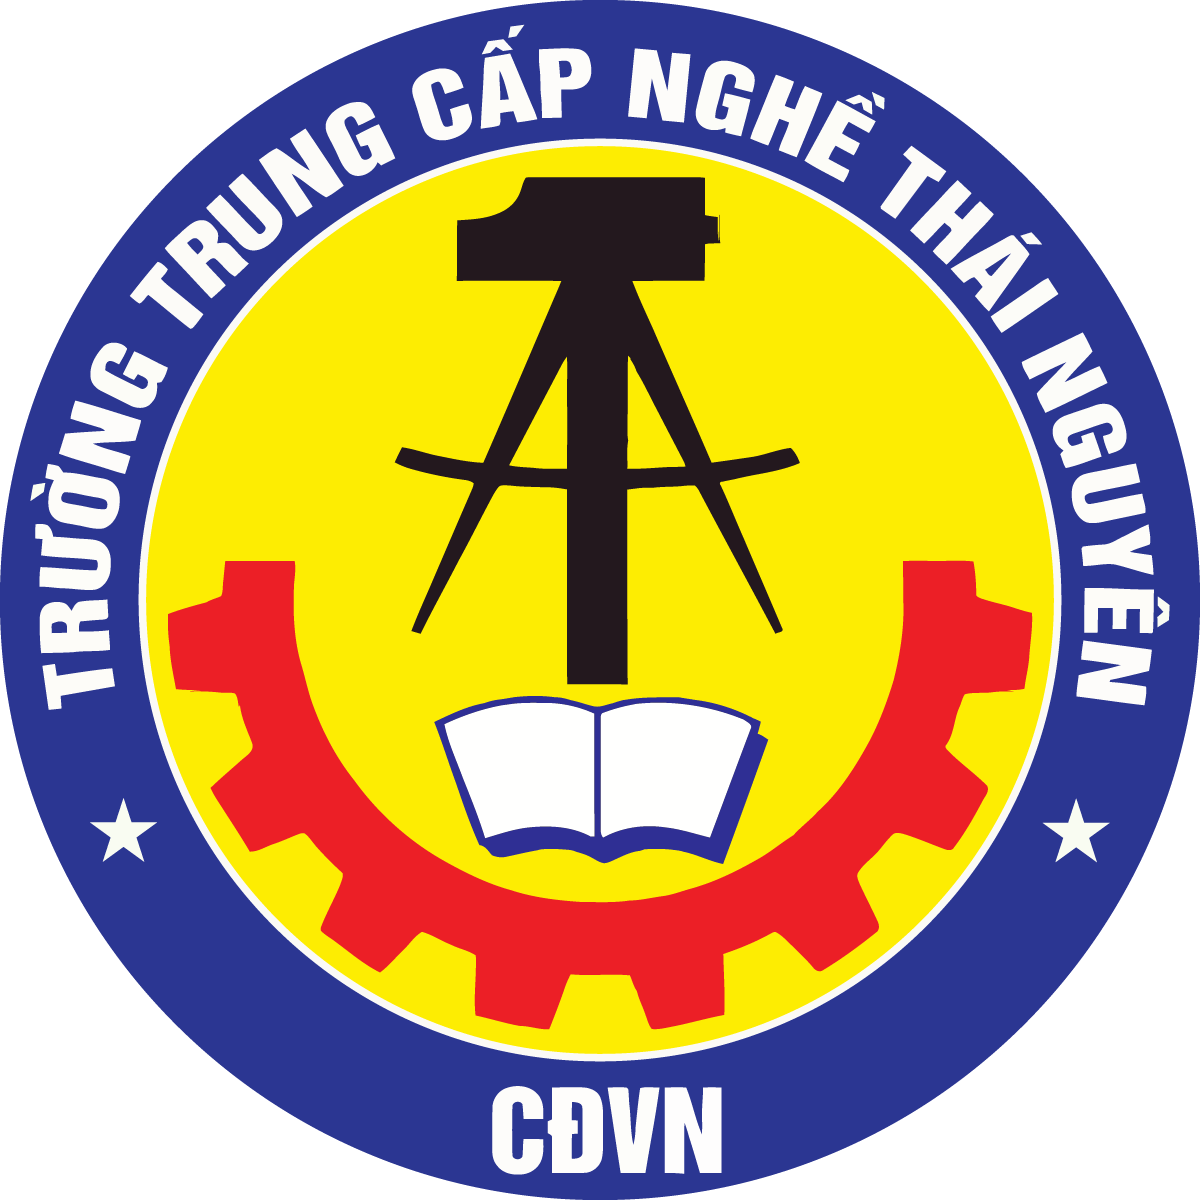 Logo Trung cap nghe Thai Nguyen